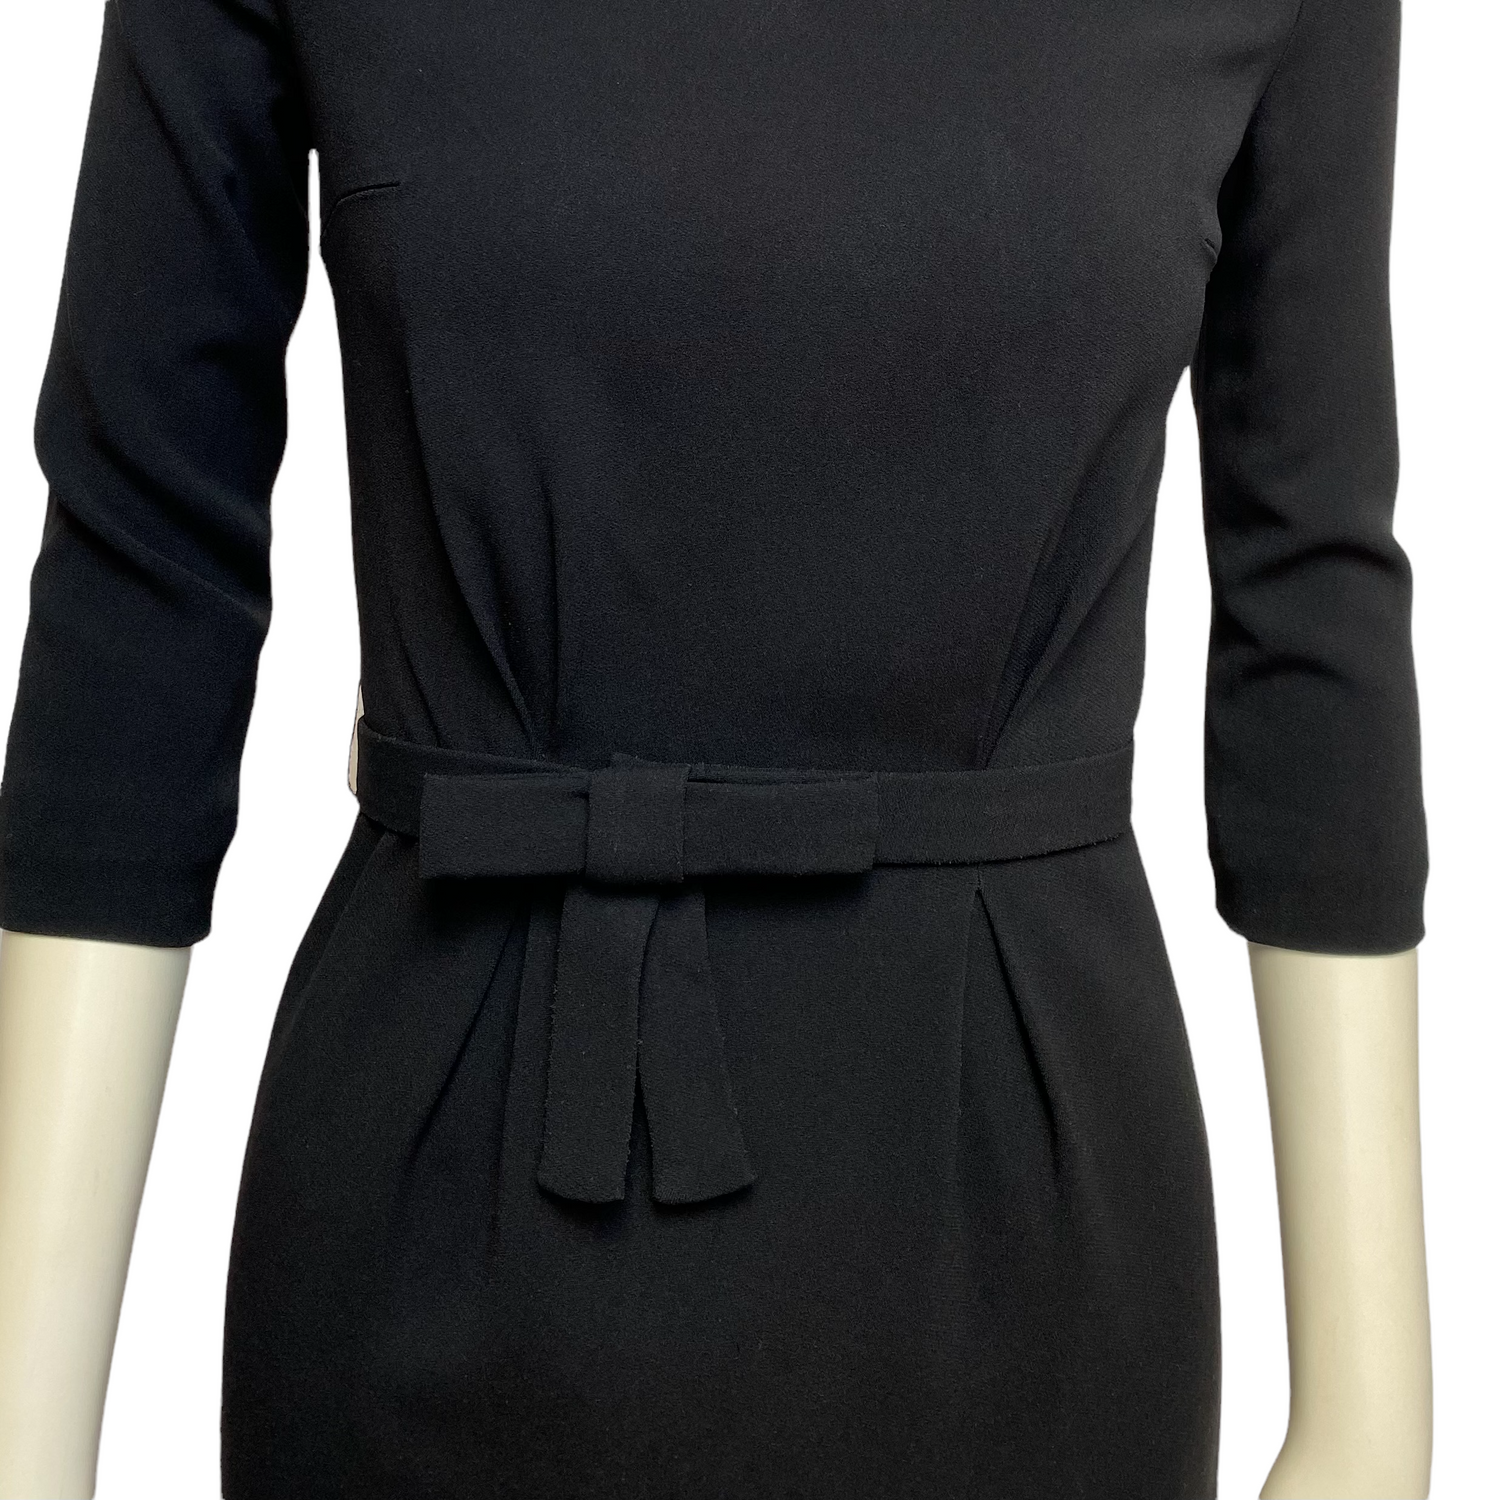 Christian Dior Boutique black dress - S - 2010s